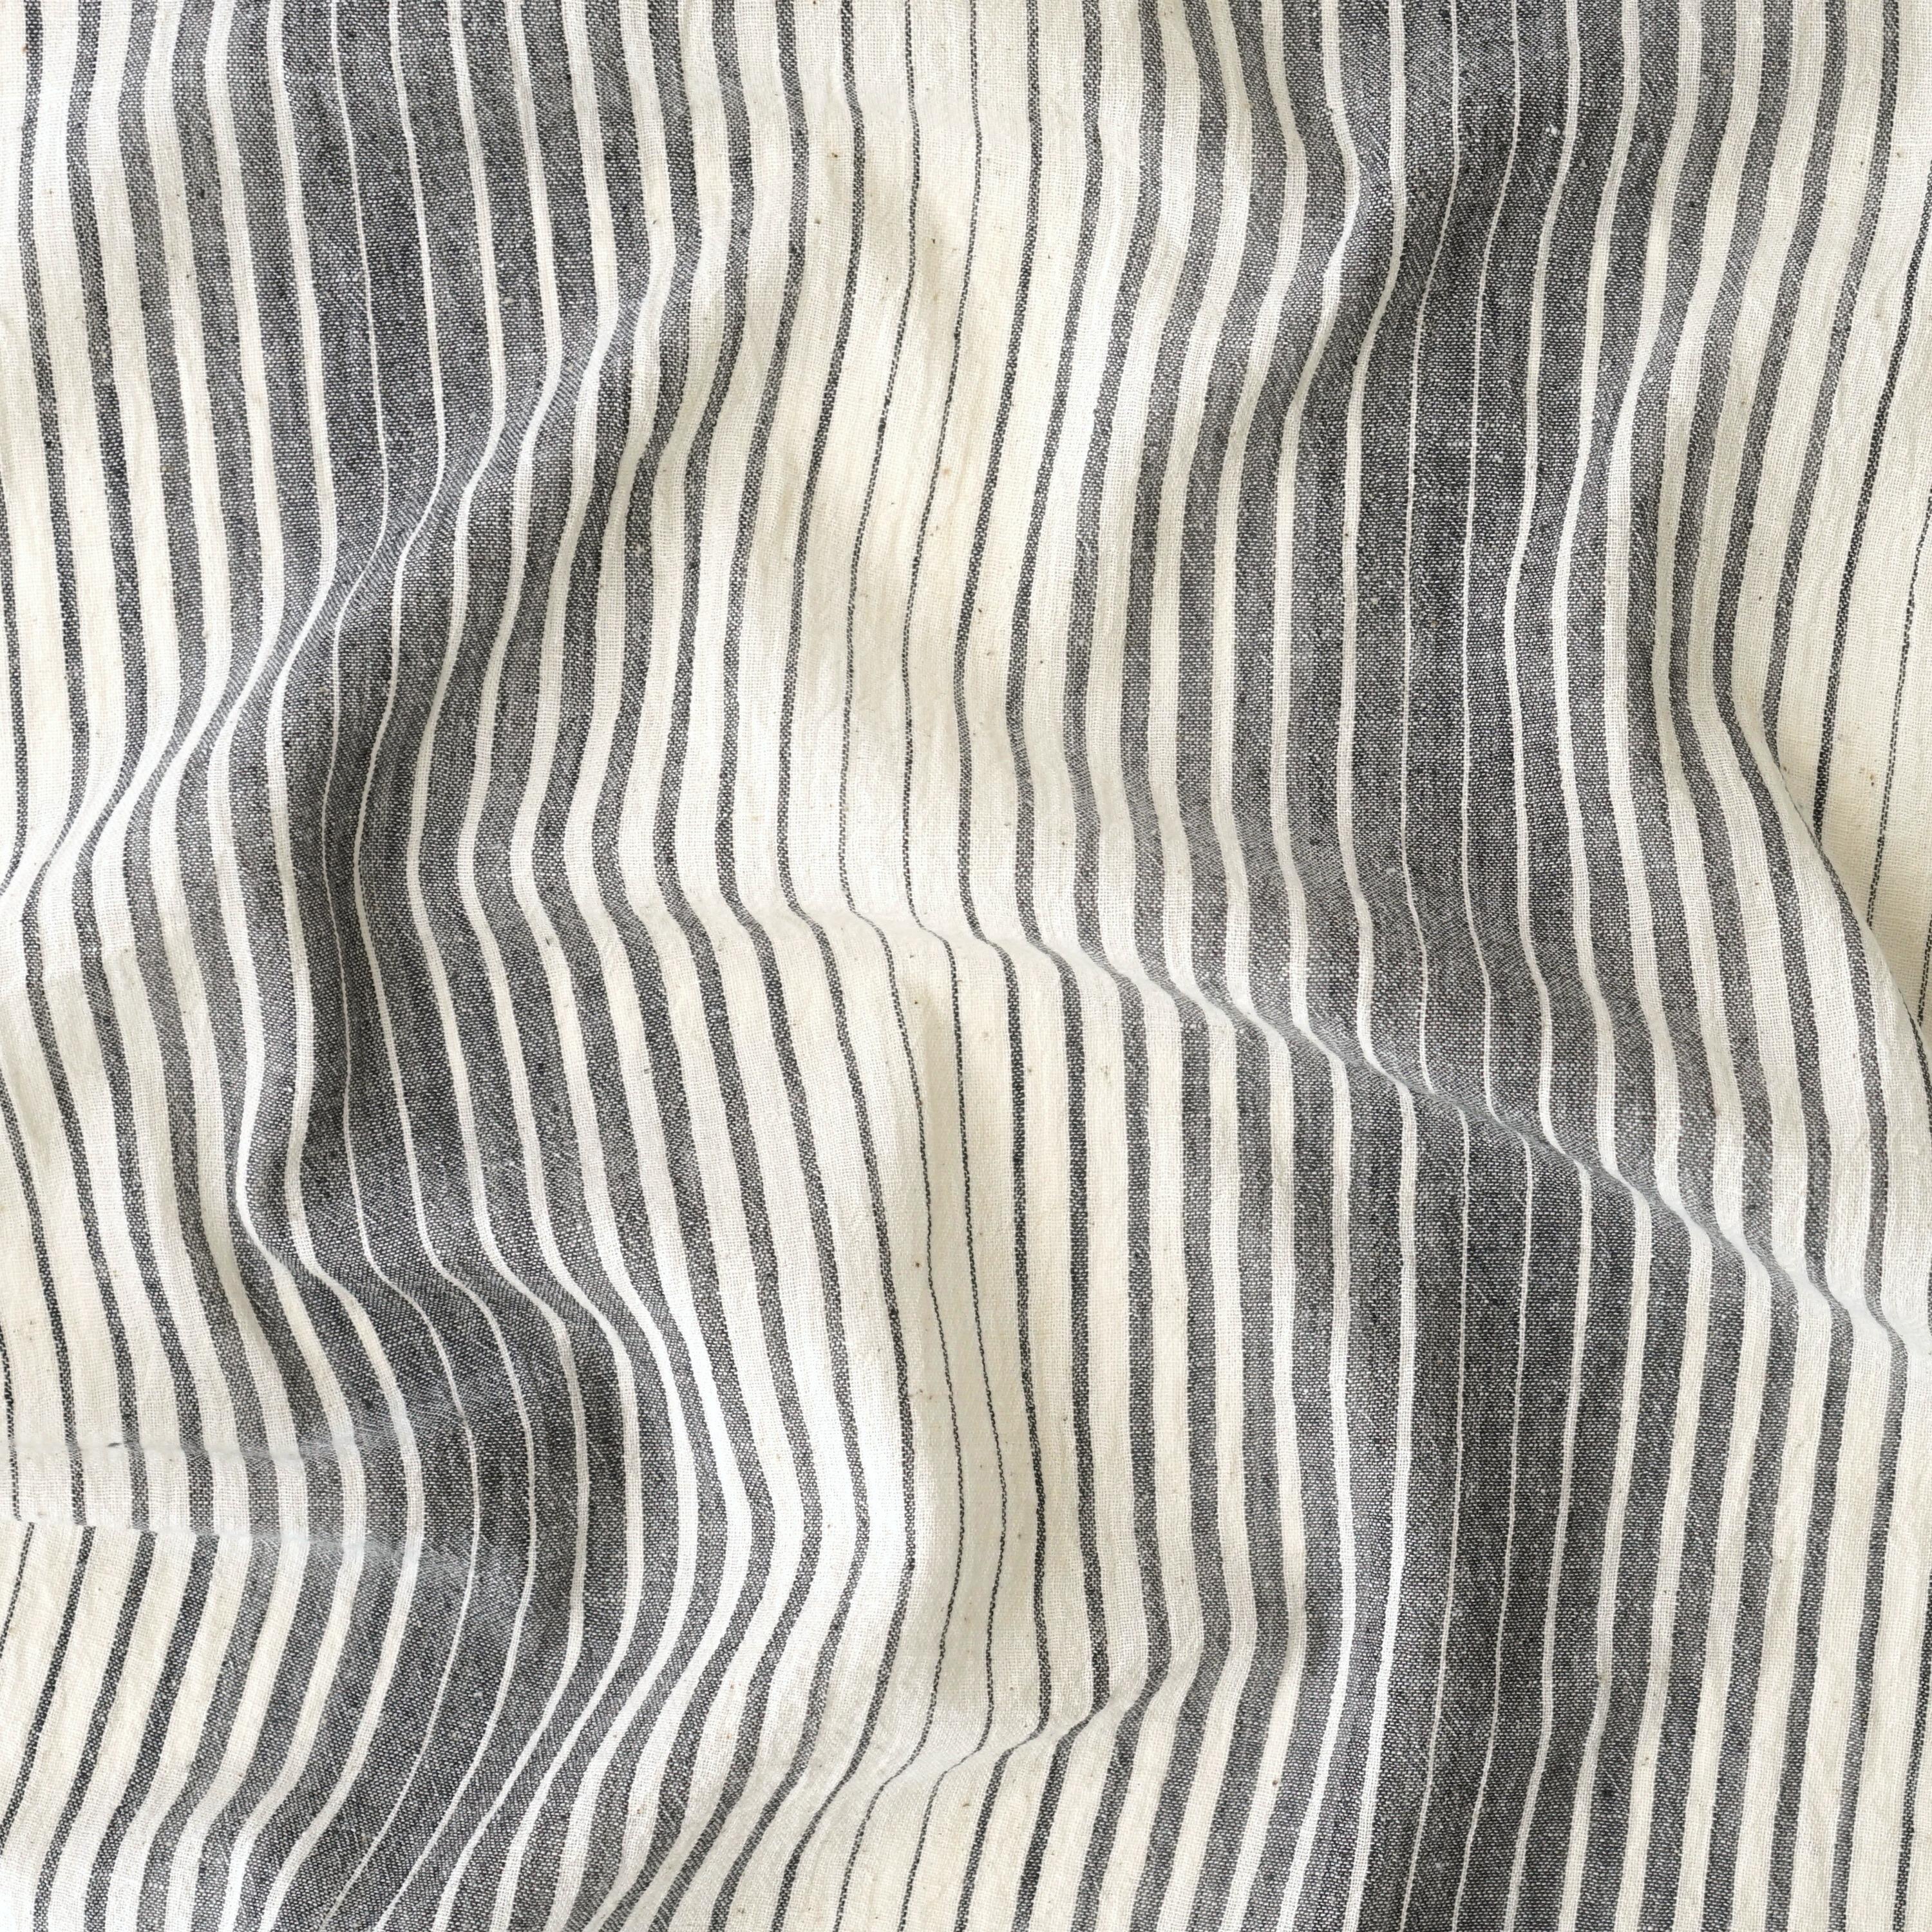 KHE03 - Organic Kala Cotton - Handloom Woven - Natural Dye - Charcoal Black - Fading Stripes - One By One - Contrast